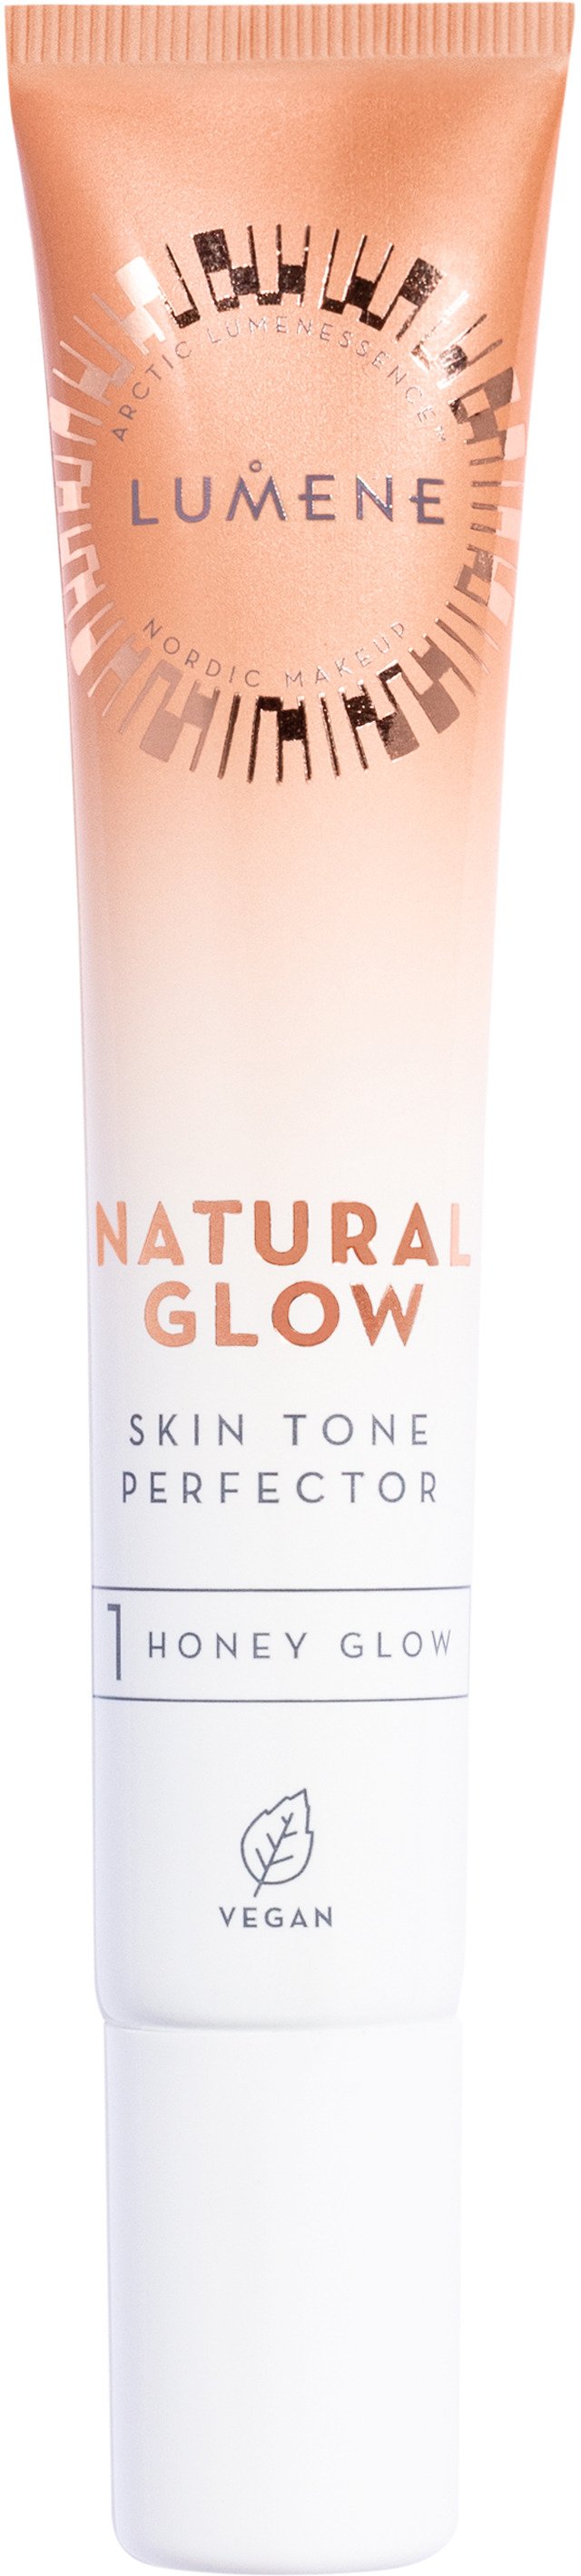 Lumene Natural Glow Skin Tone Perfector 1 Honey Glow 20 ml